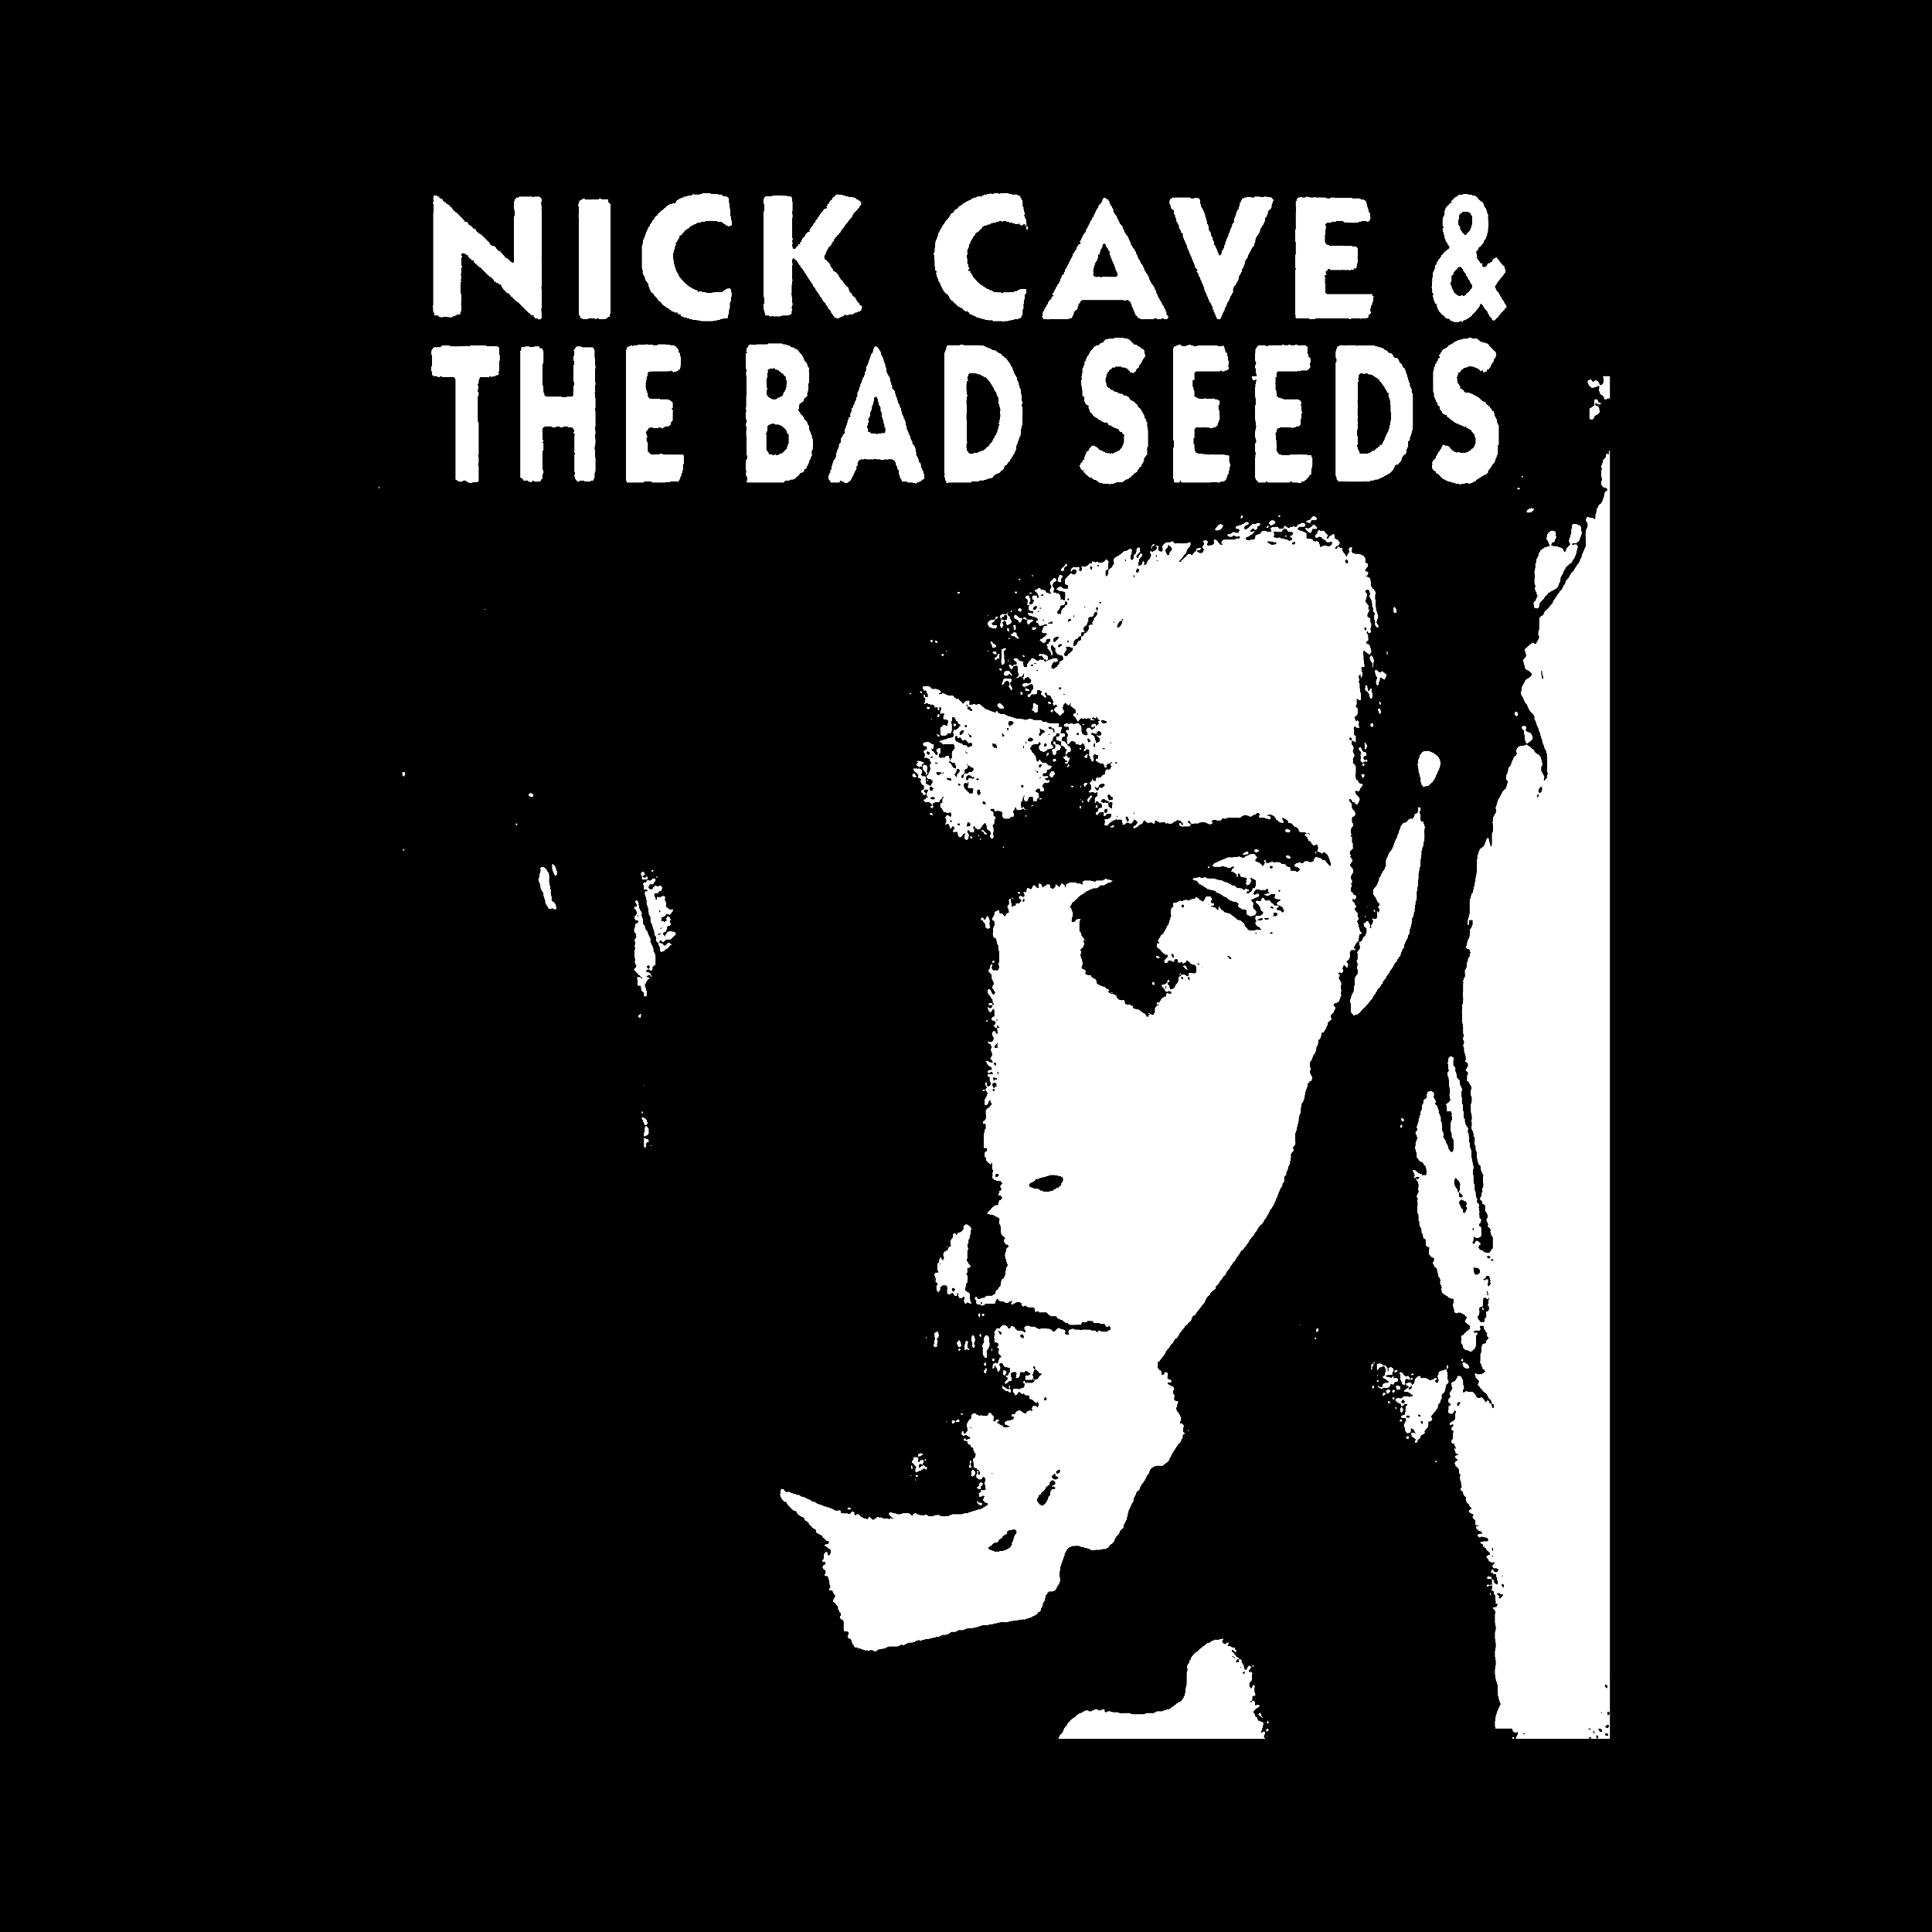 Nick Cave Bad Seeds Classic Tee